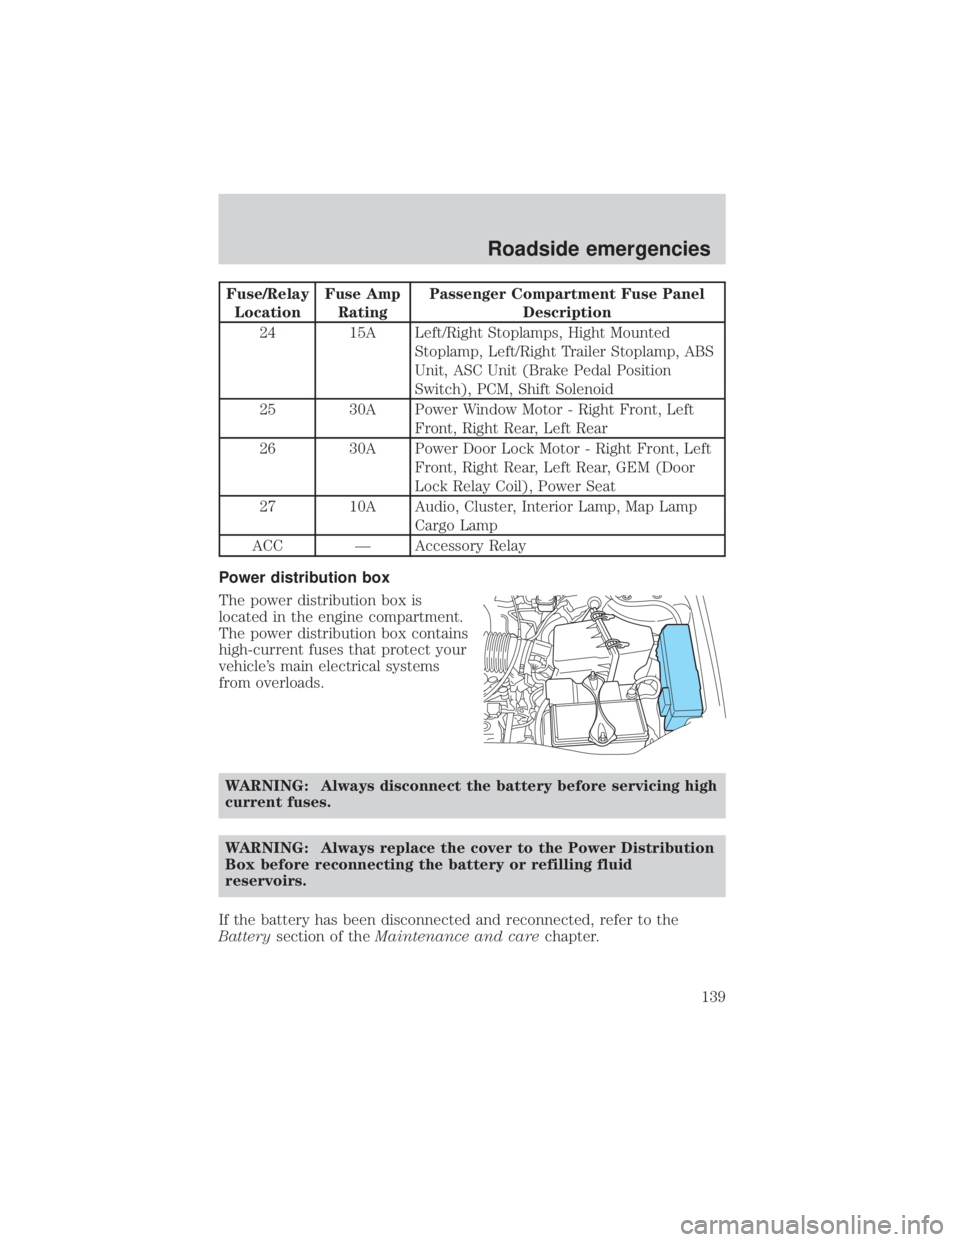 MAZDA MODEL TRIBUTE 4WD 2001  Owners Manual Fuse/RelayLocation Fuse Amp
Rating Passenger Compartment Fuse Panel
Description
24 15A Left/Right Stoplamps, Hight Mounted Stoplamp, Left/Right Trailer Stoplamp, ABS
Unit, ASC Unit (Brake Pedal Positi